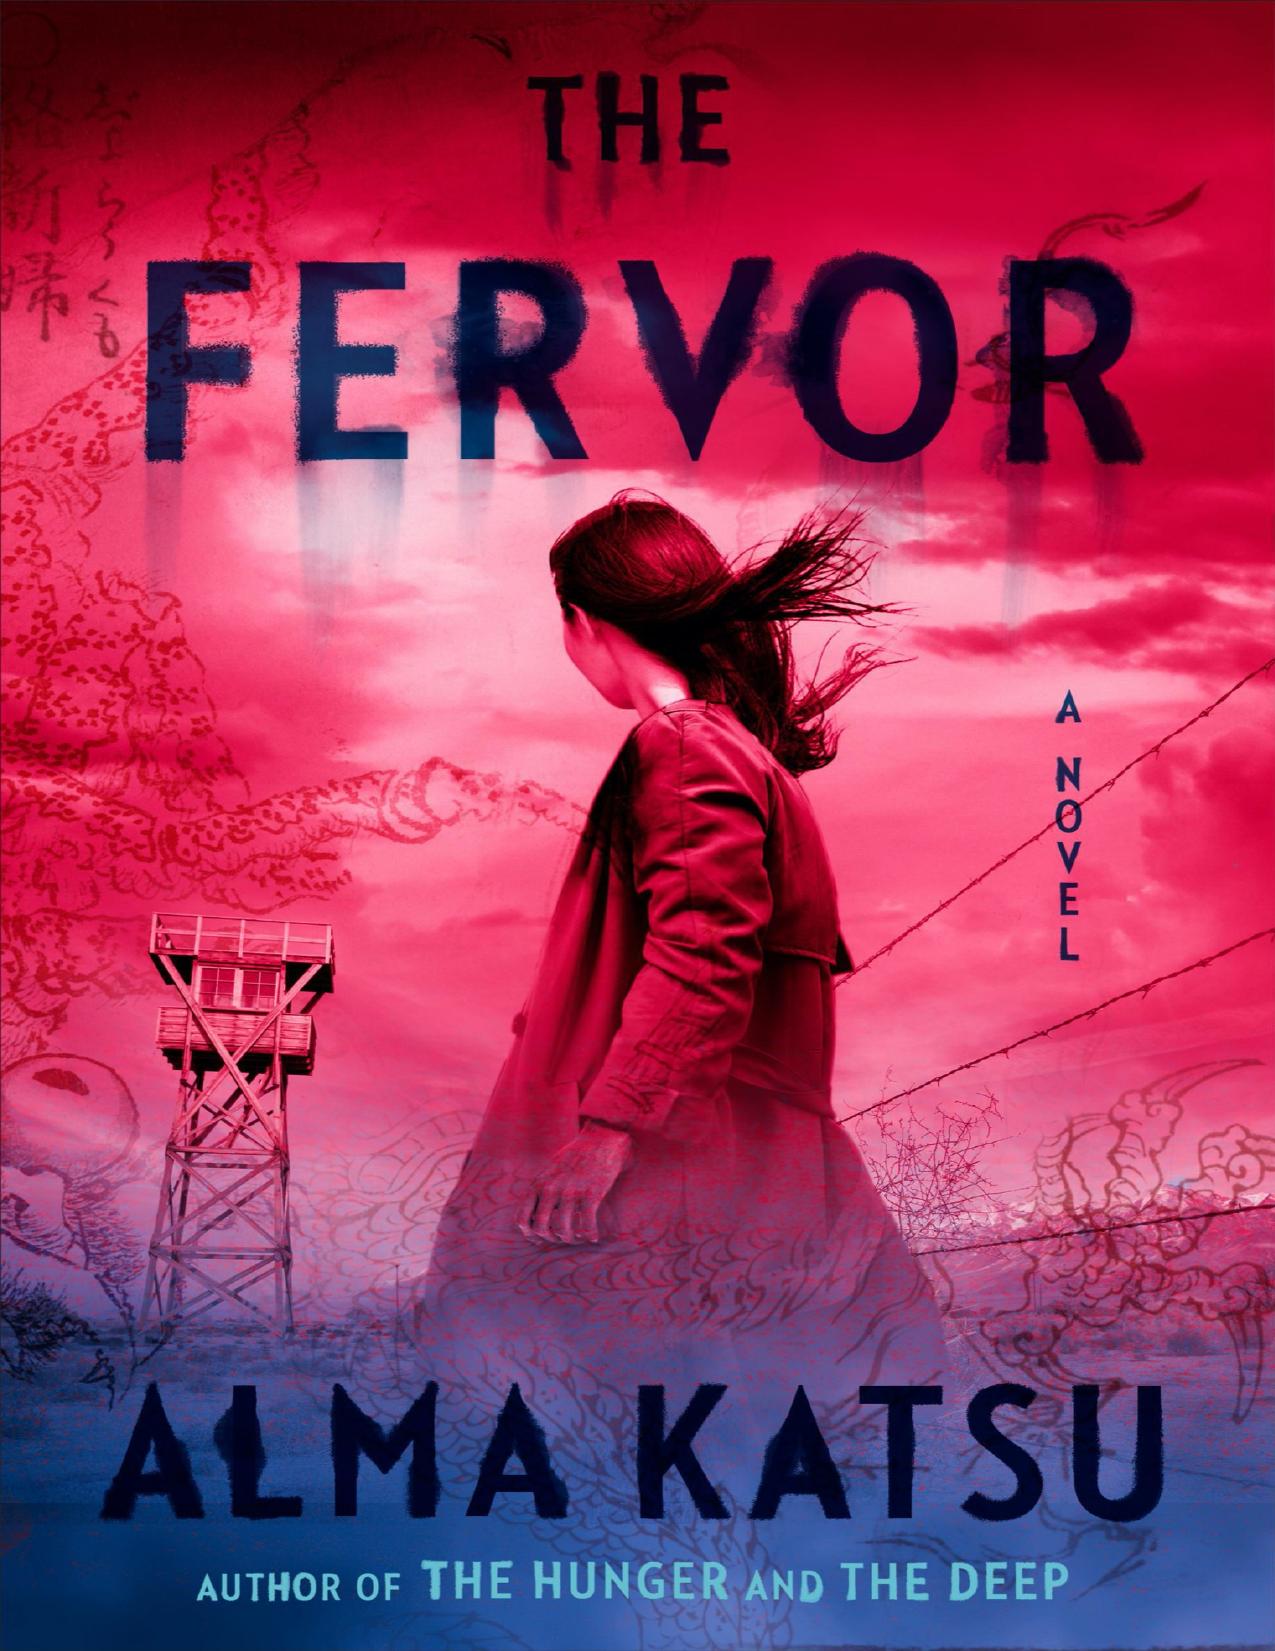 The Fervor - Alma Katsu